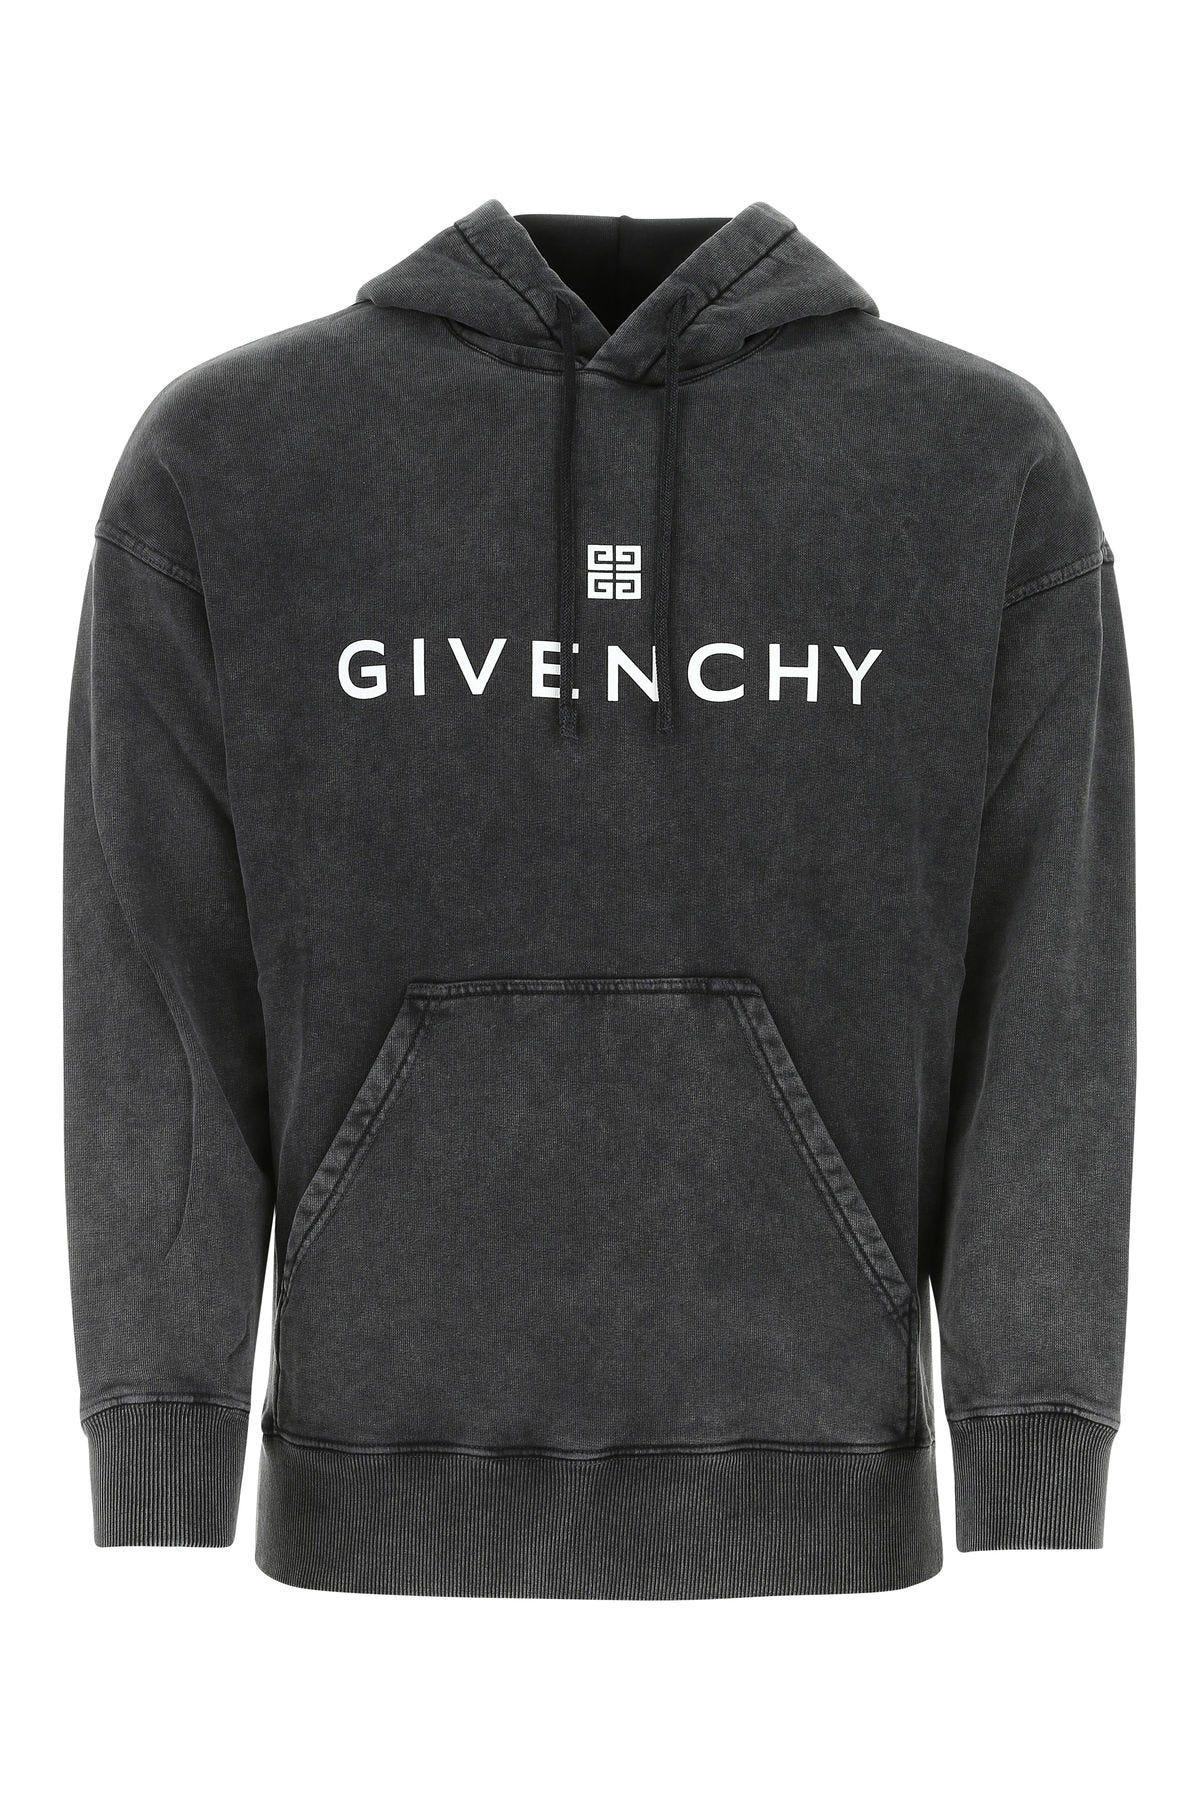 Givenchy Charcoal Cotton Sweatshirt